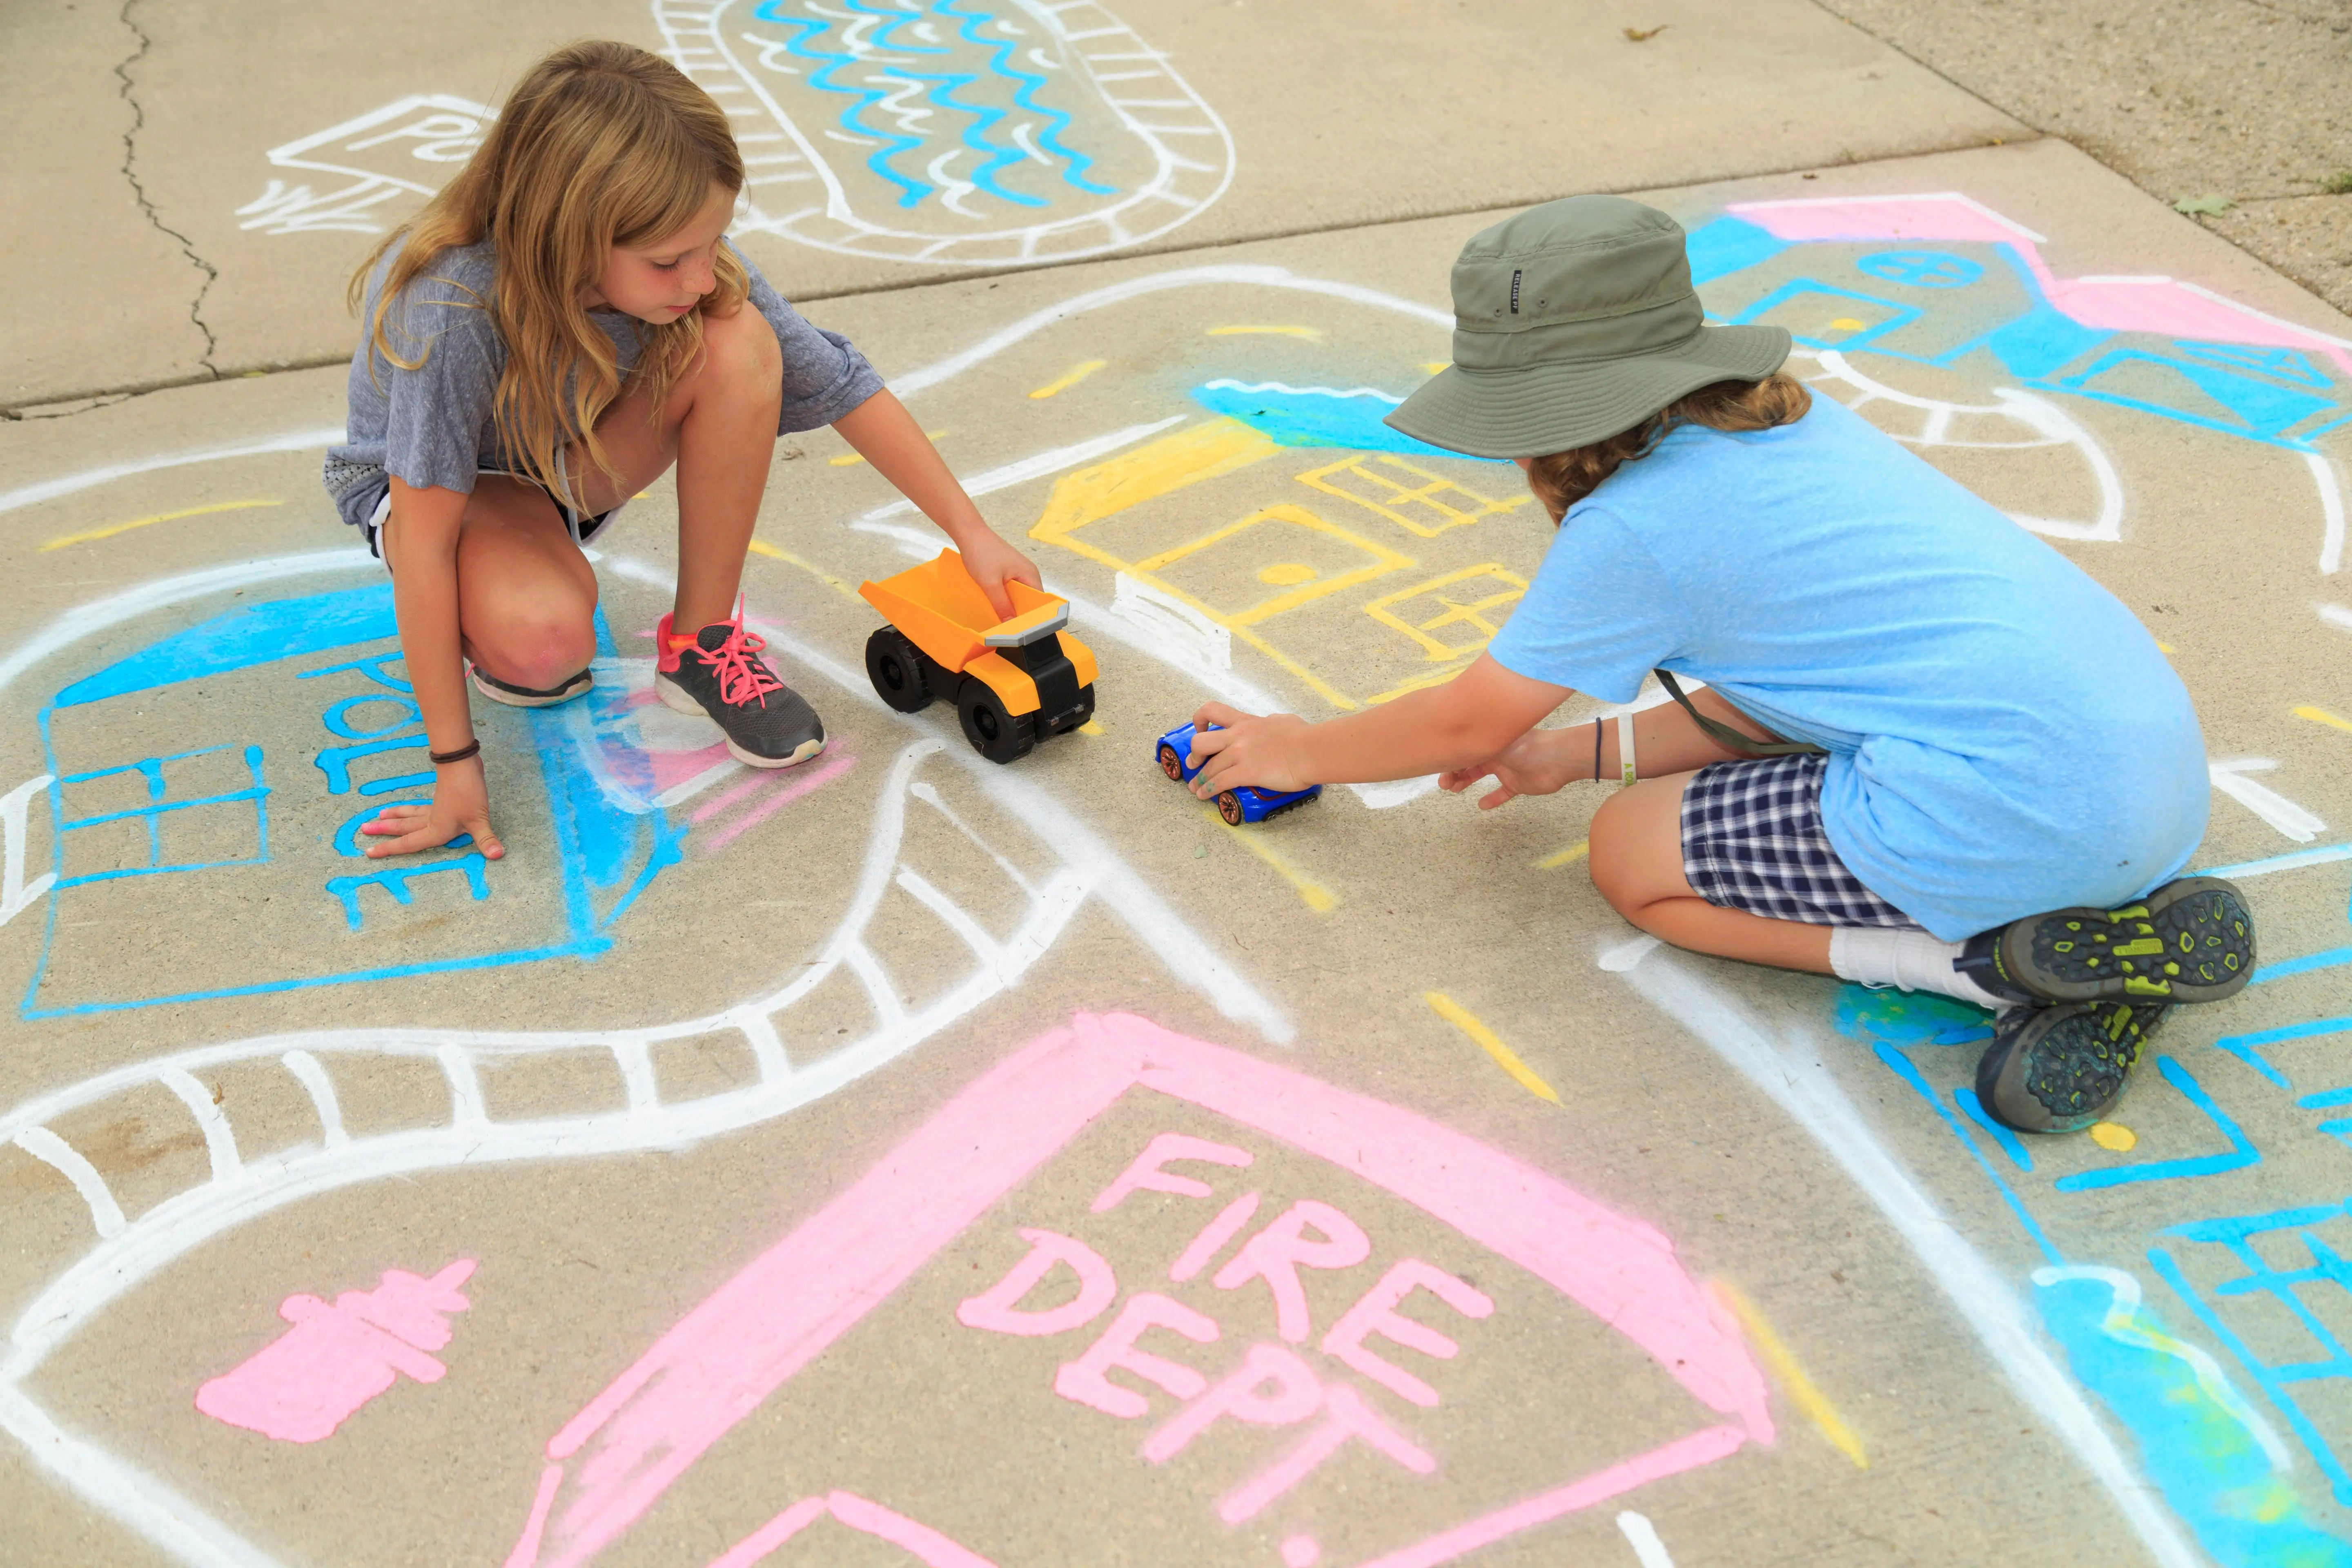 Aeropak 400ml Erasable Washable Removable Temporary Graffiti Chalk Spray Paint for kids drawing